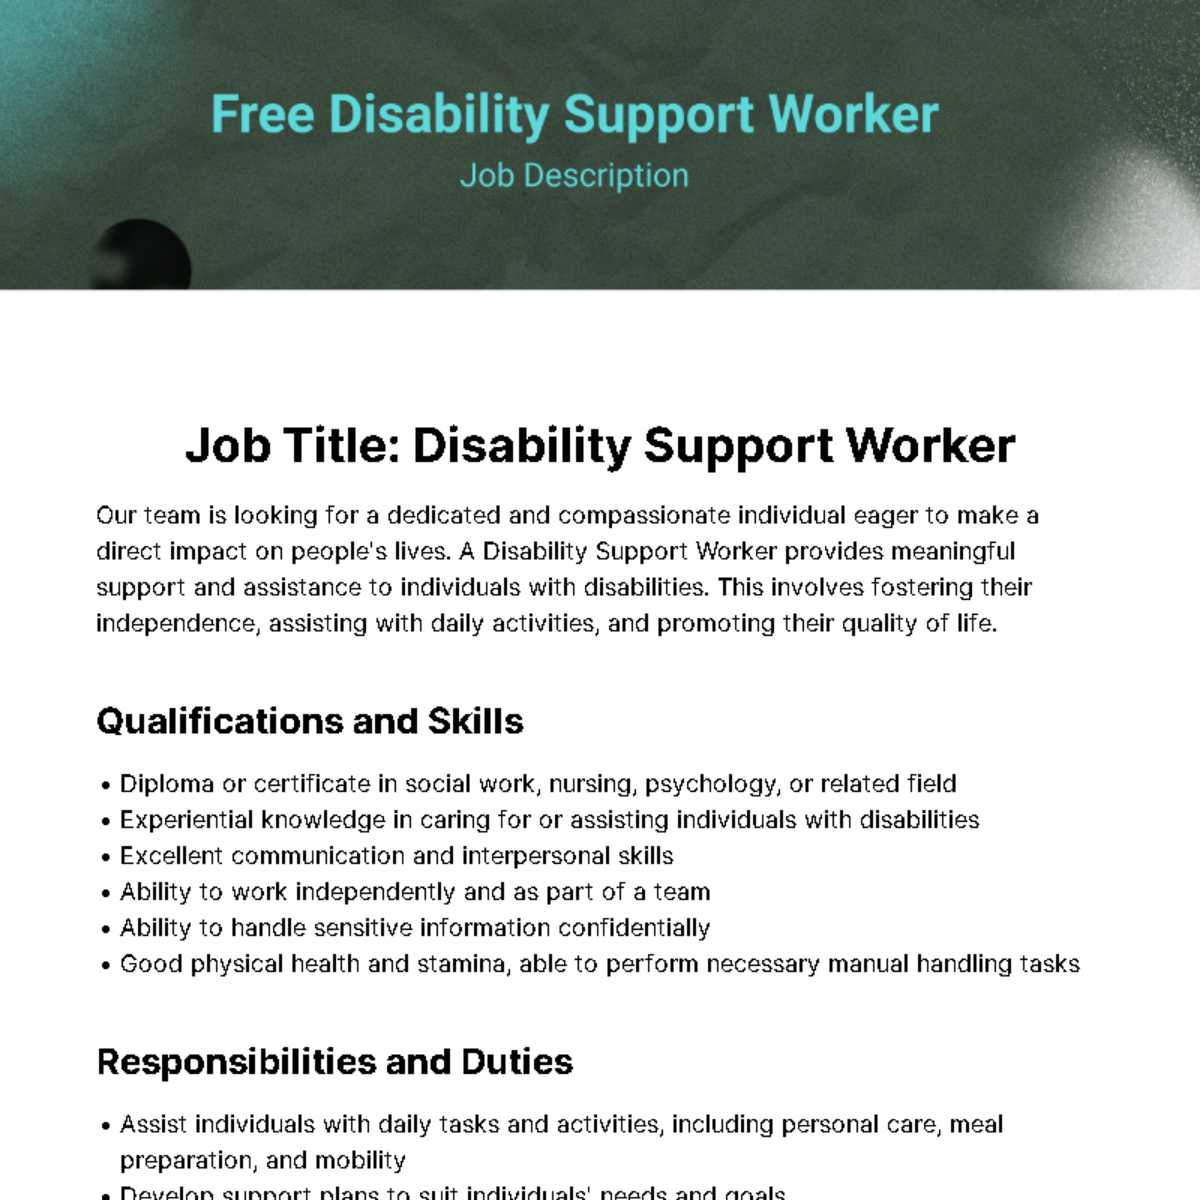 Free Disability Support Worker Job Description Template